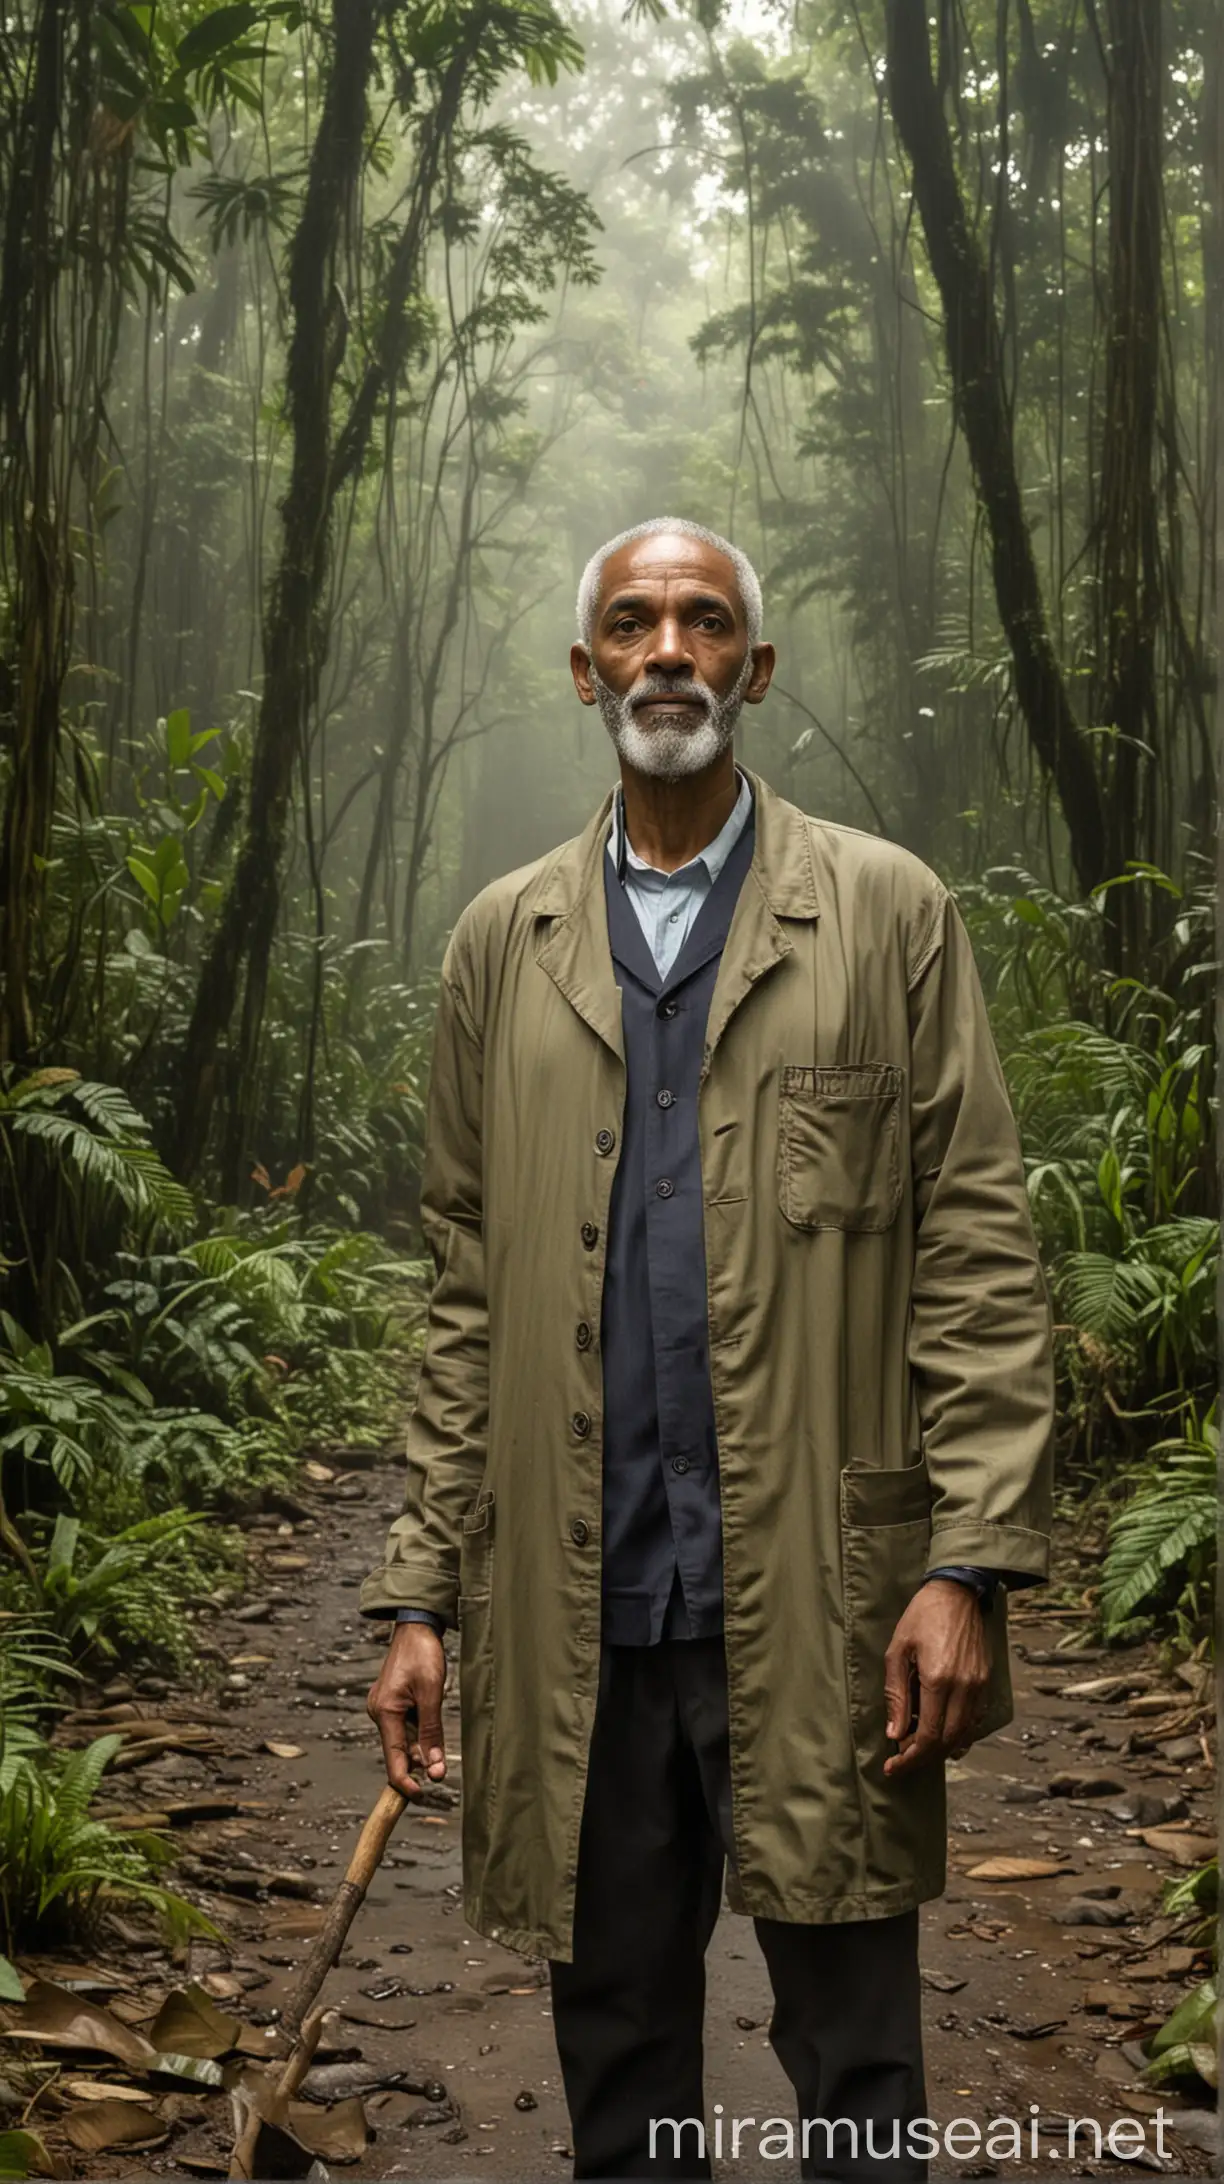 Doctor Sebi Journeying Through South American Rainforests